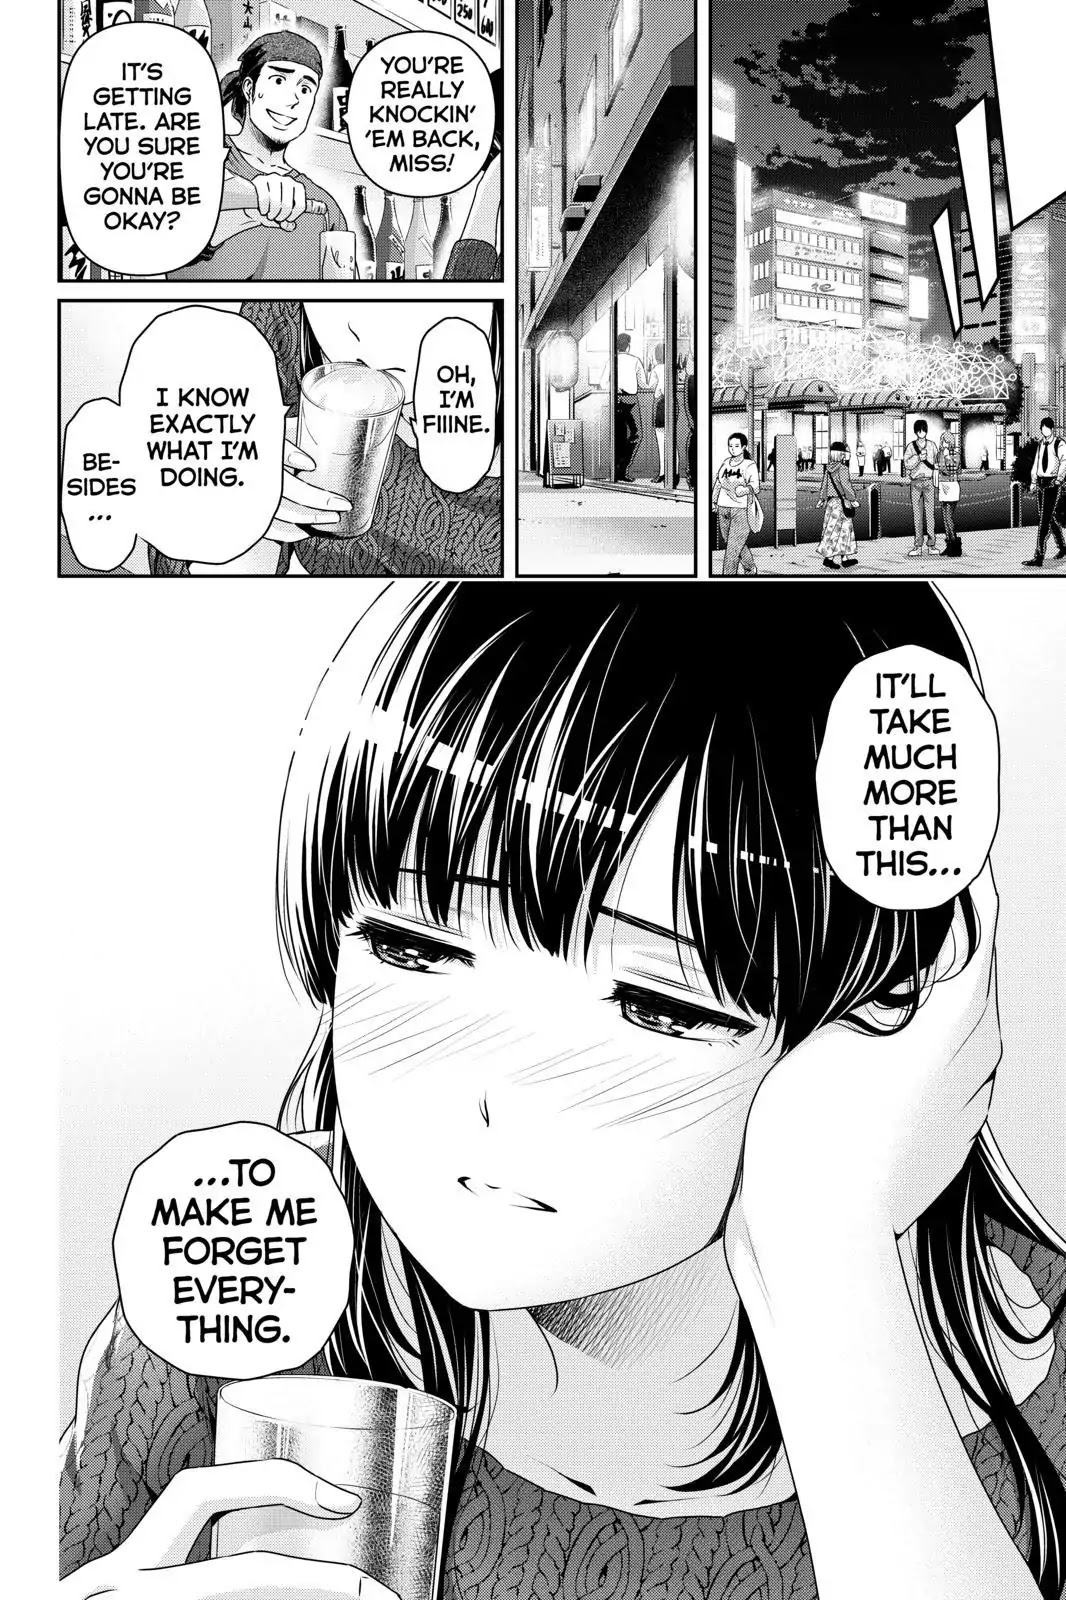 Domestic Girlfriend Manga Ending Discussion : The domestic girlfriend manga...